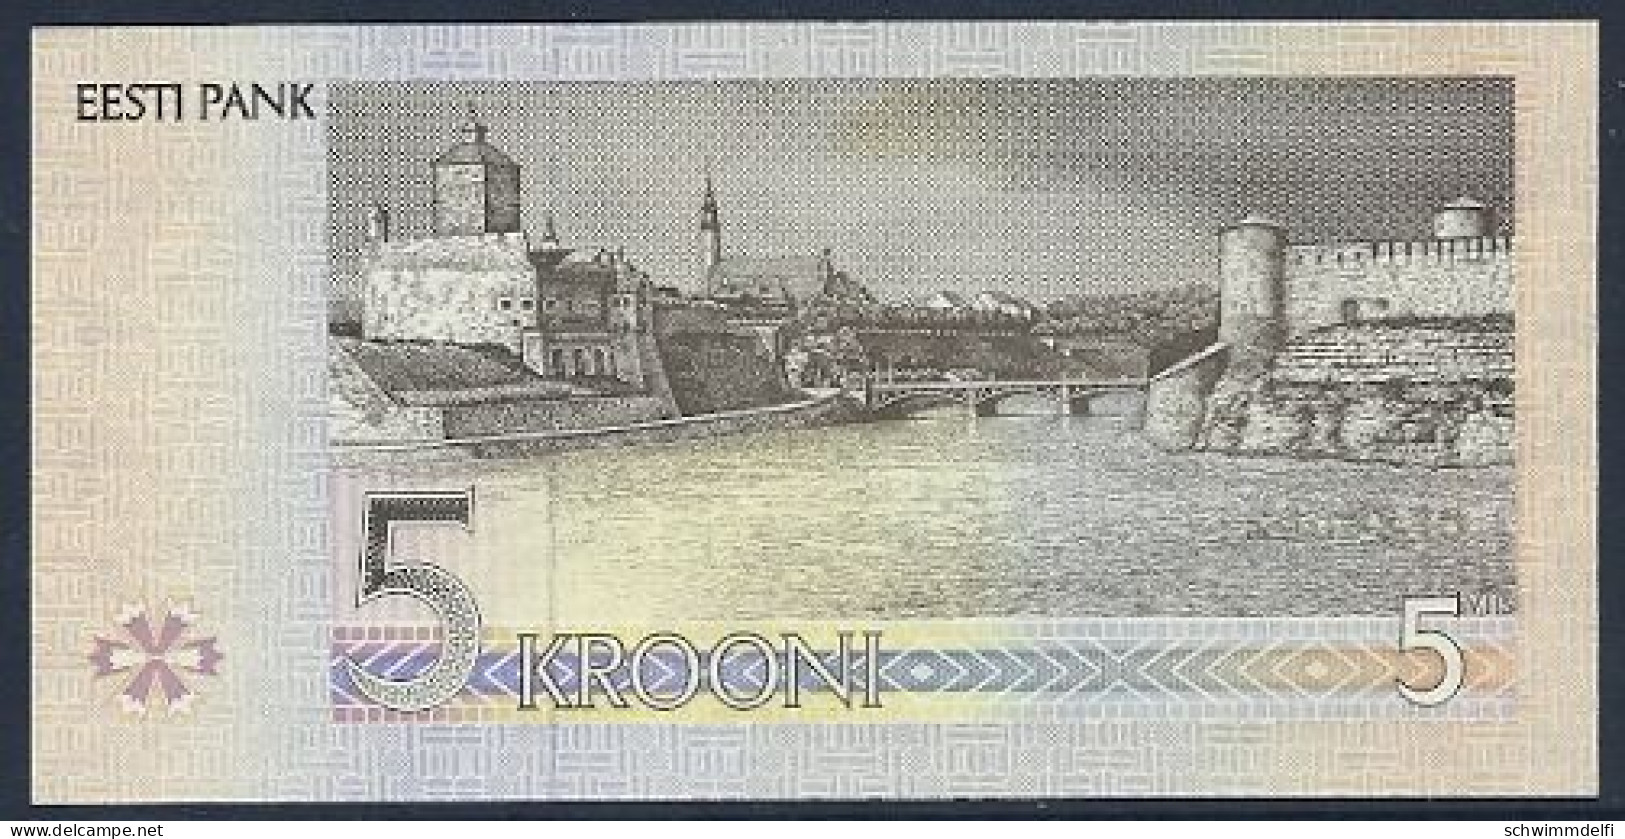 ESTLAND - ESTONIA - 5 KROONI 1994 - SIN CIRCULAR - UNZ. - UNC. - Estonia